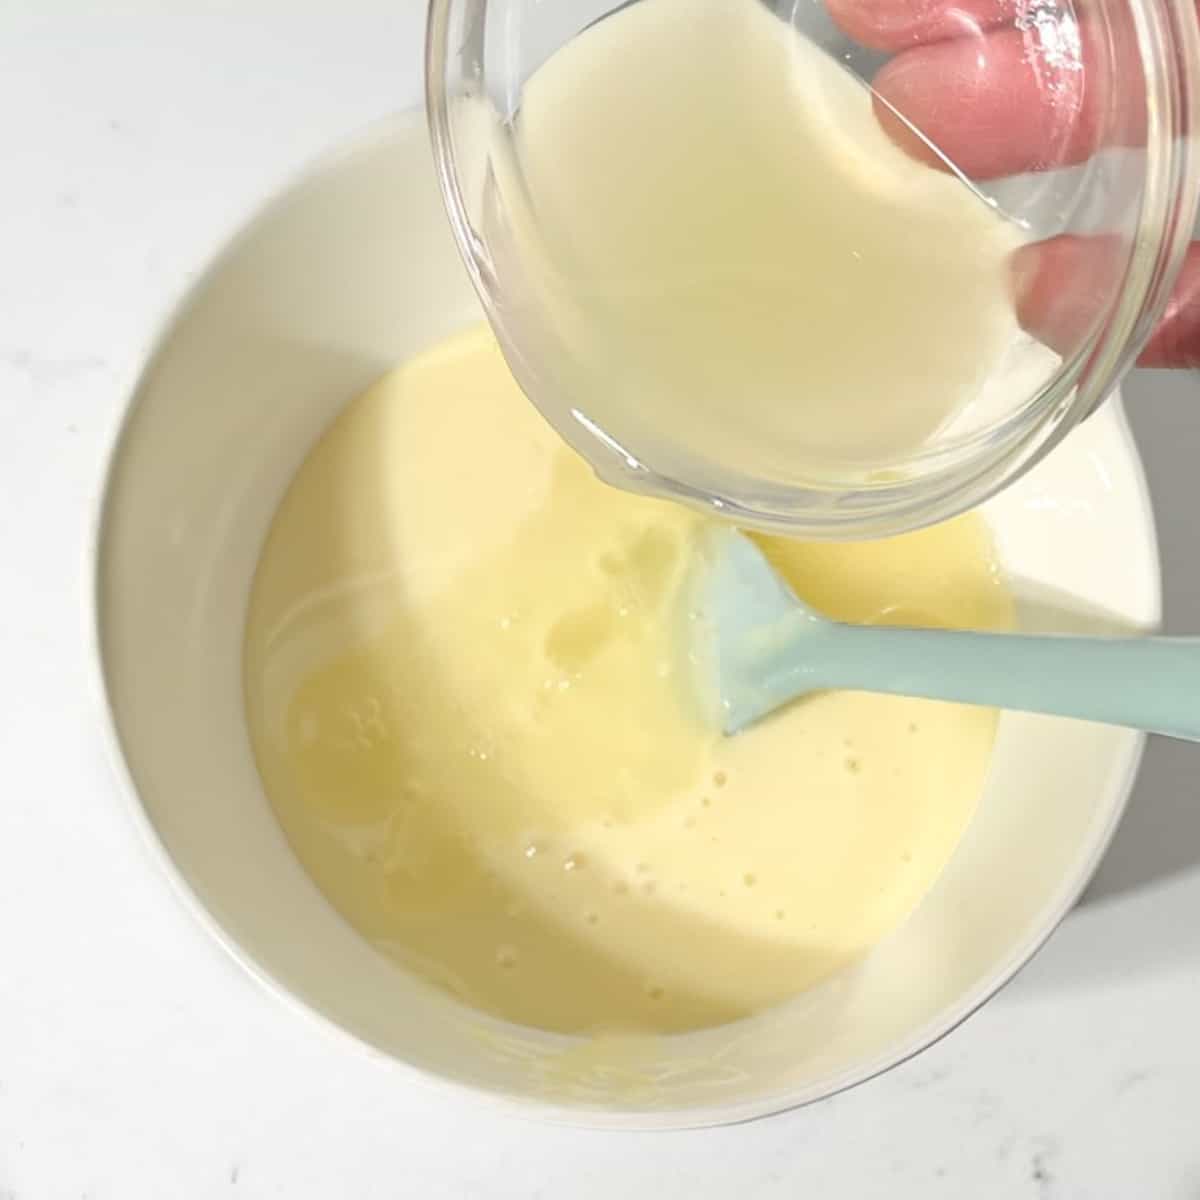 Adding lemon juice to the condensed milk.